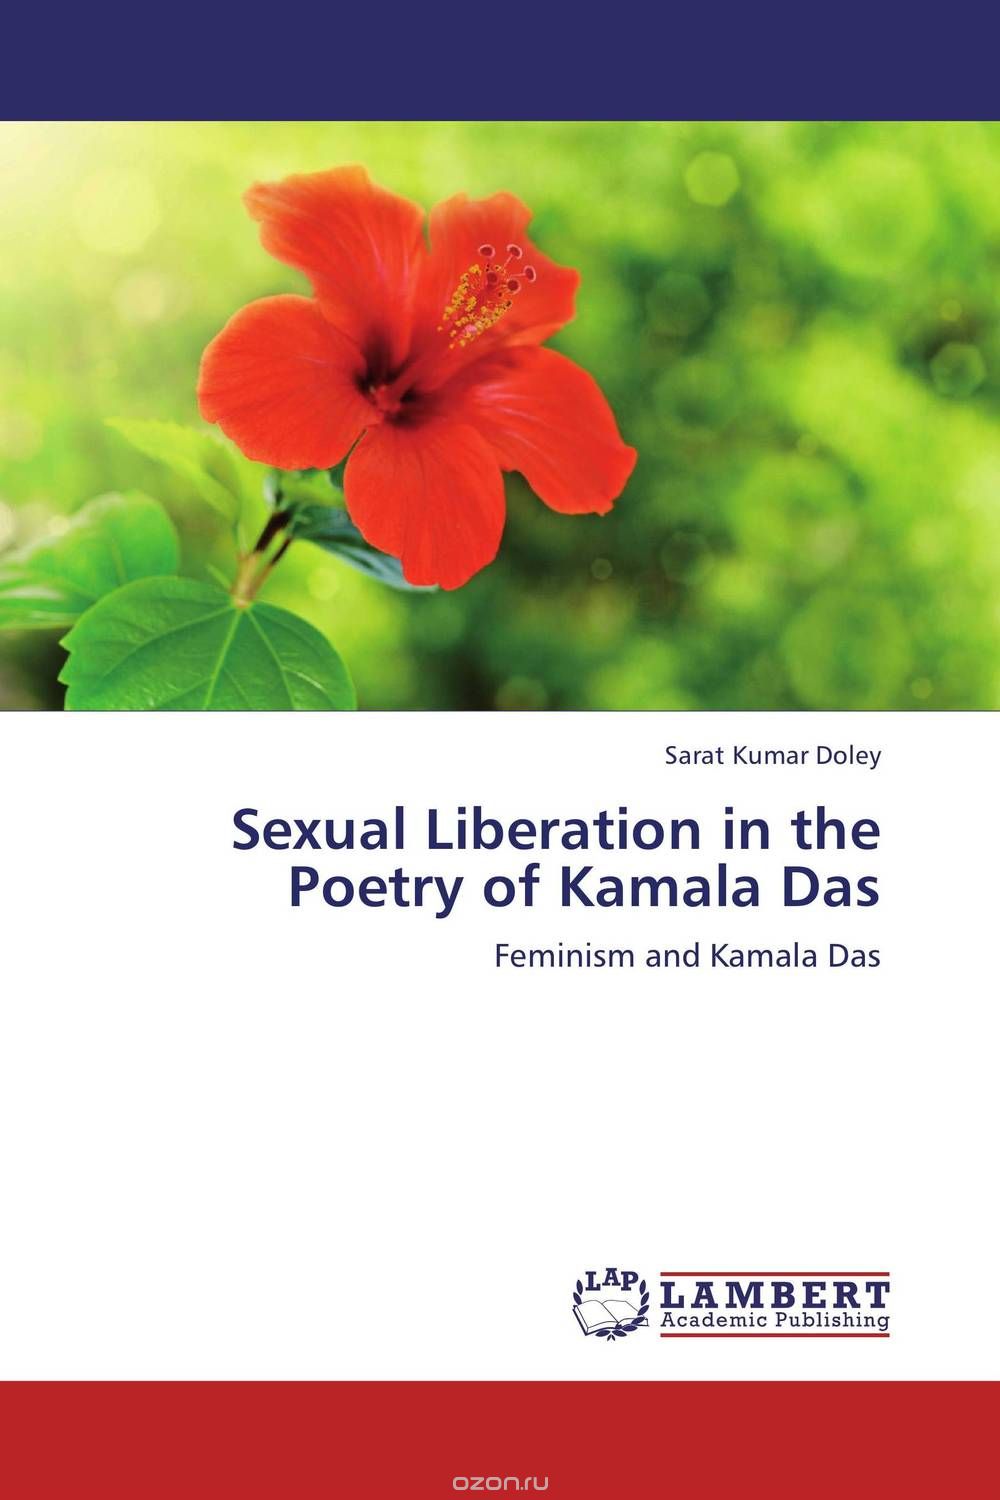 Скачать книгу "Sexual Liberation in the Poetry of Kamala Das"